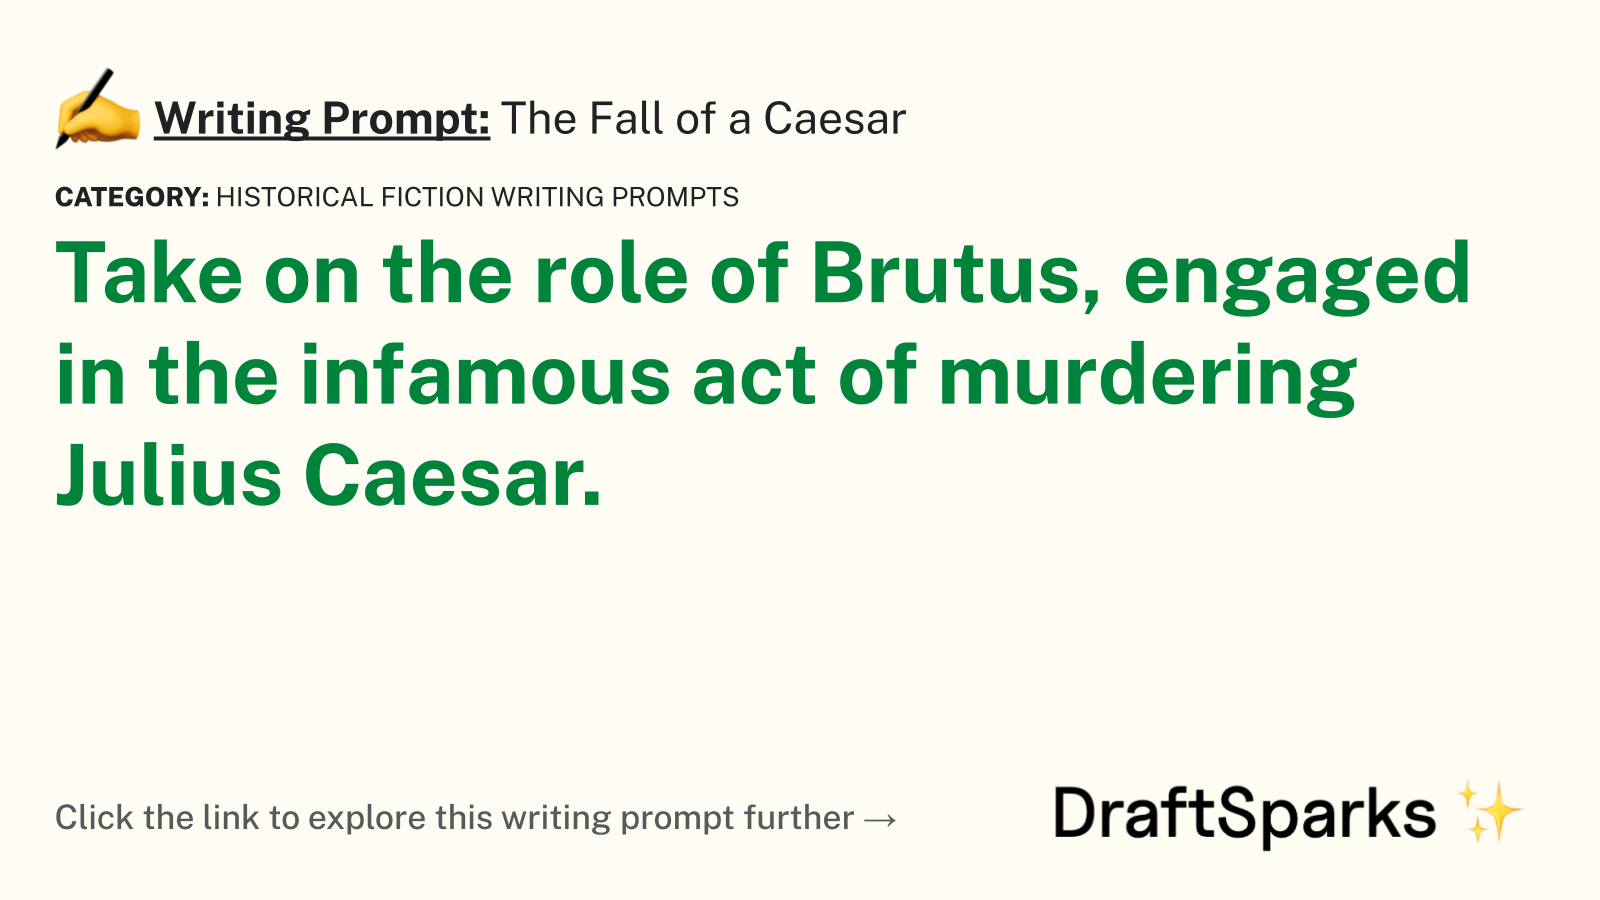 The Fall of a Caesar